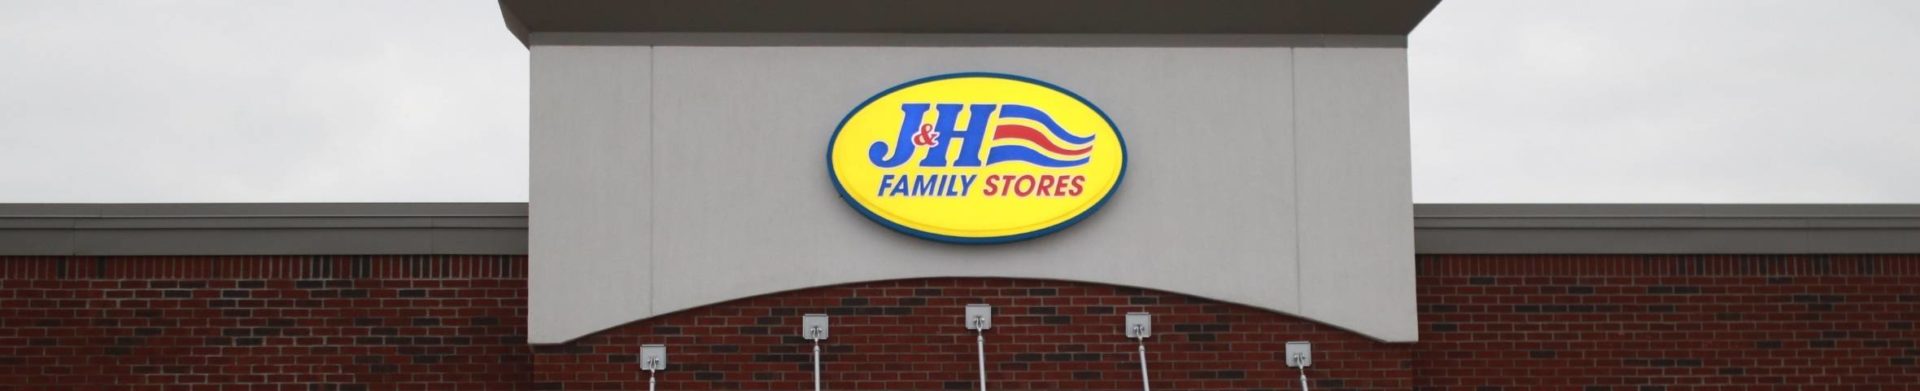 J&H Family Stores exterior white concrete above brick